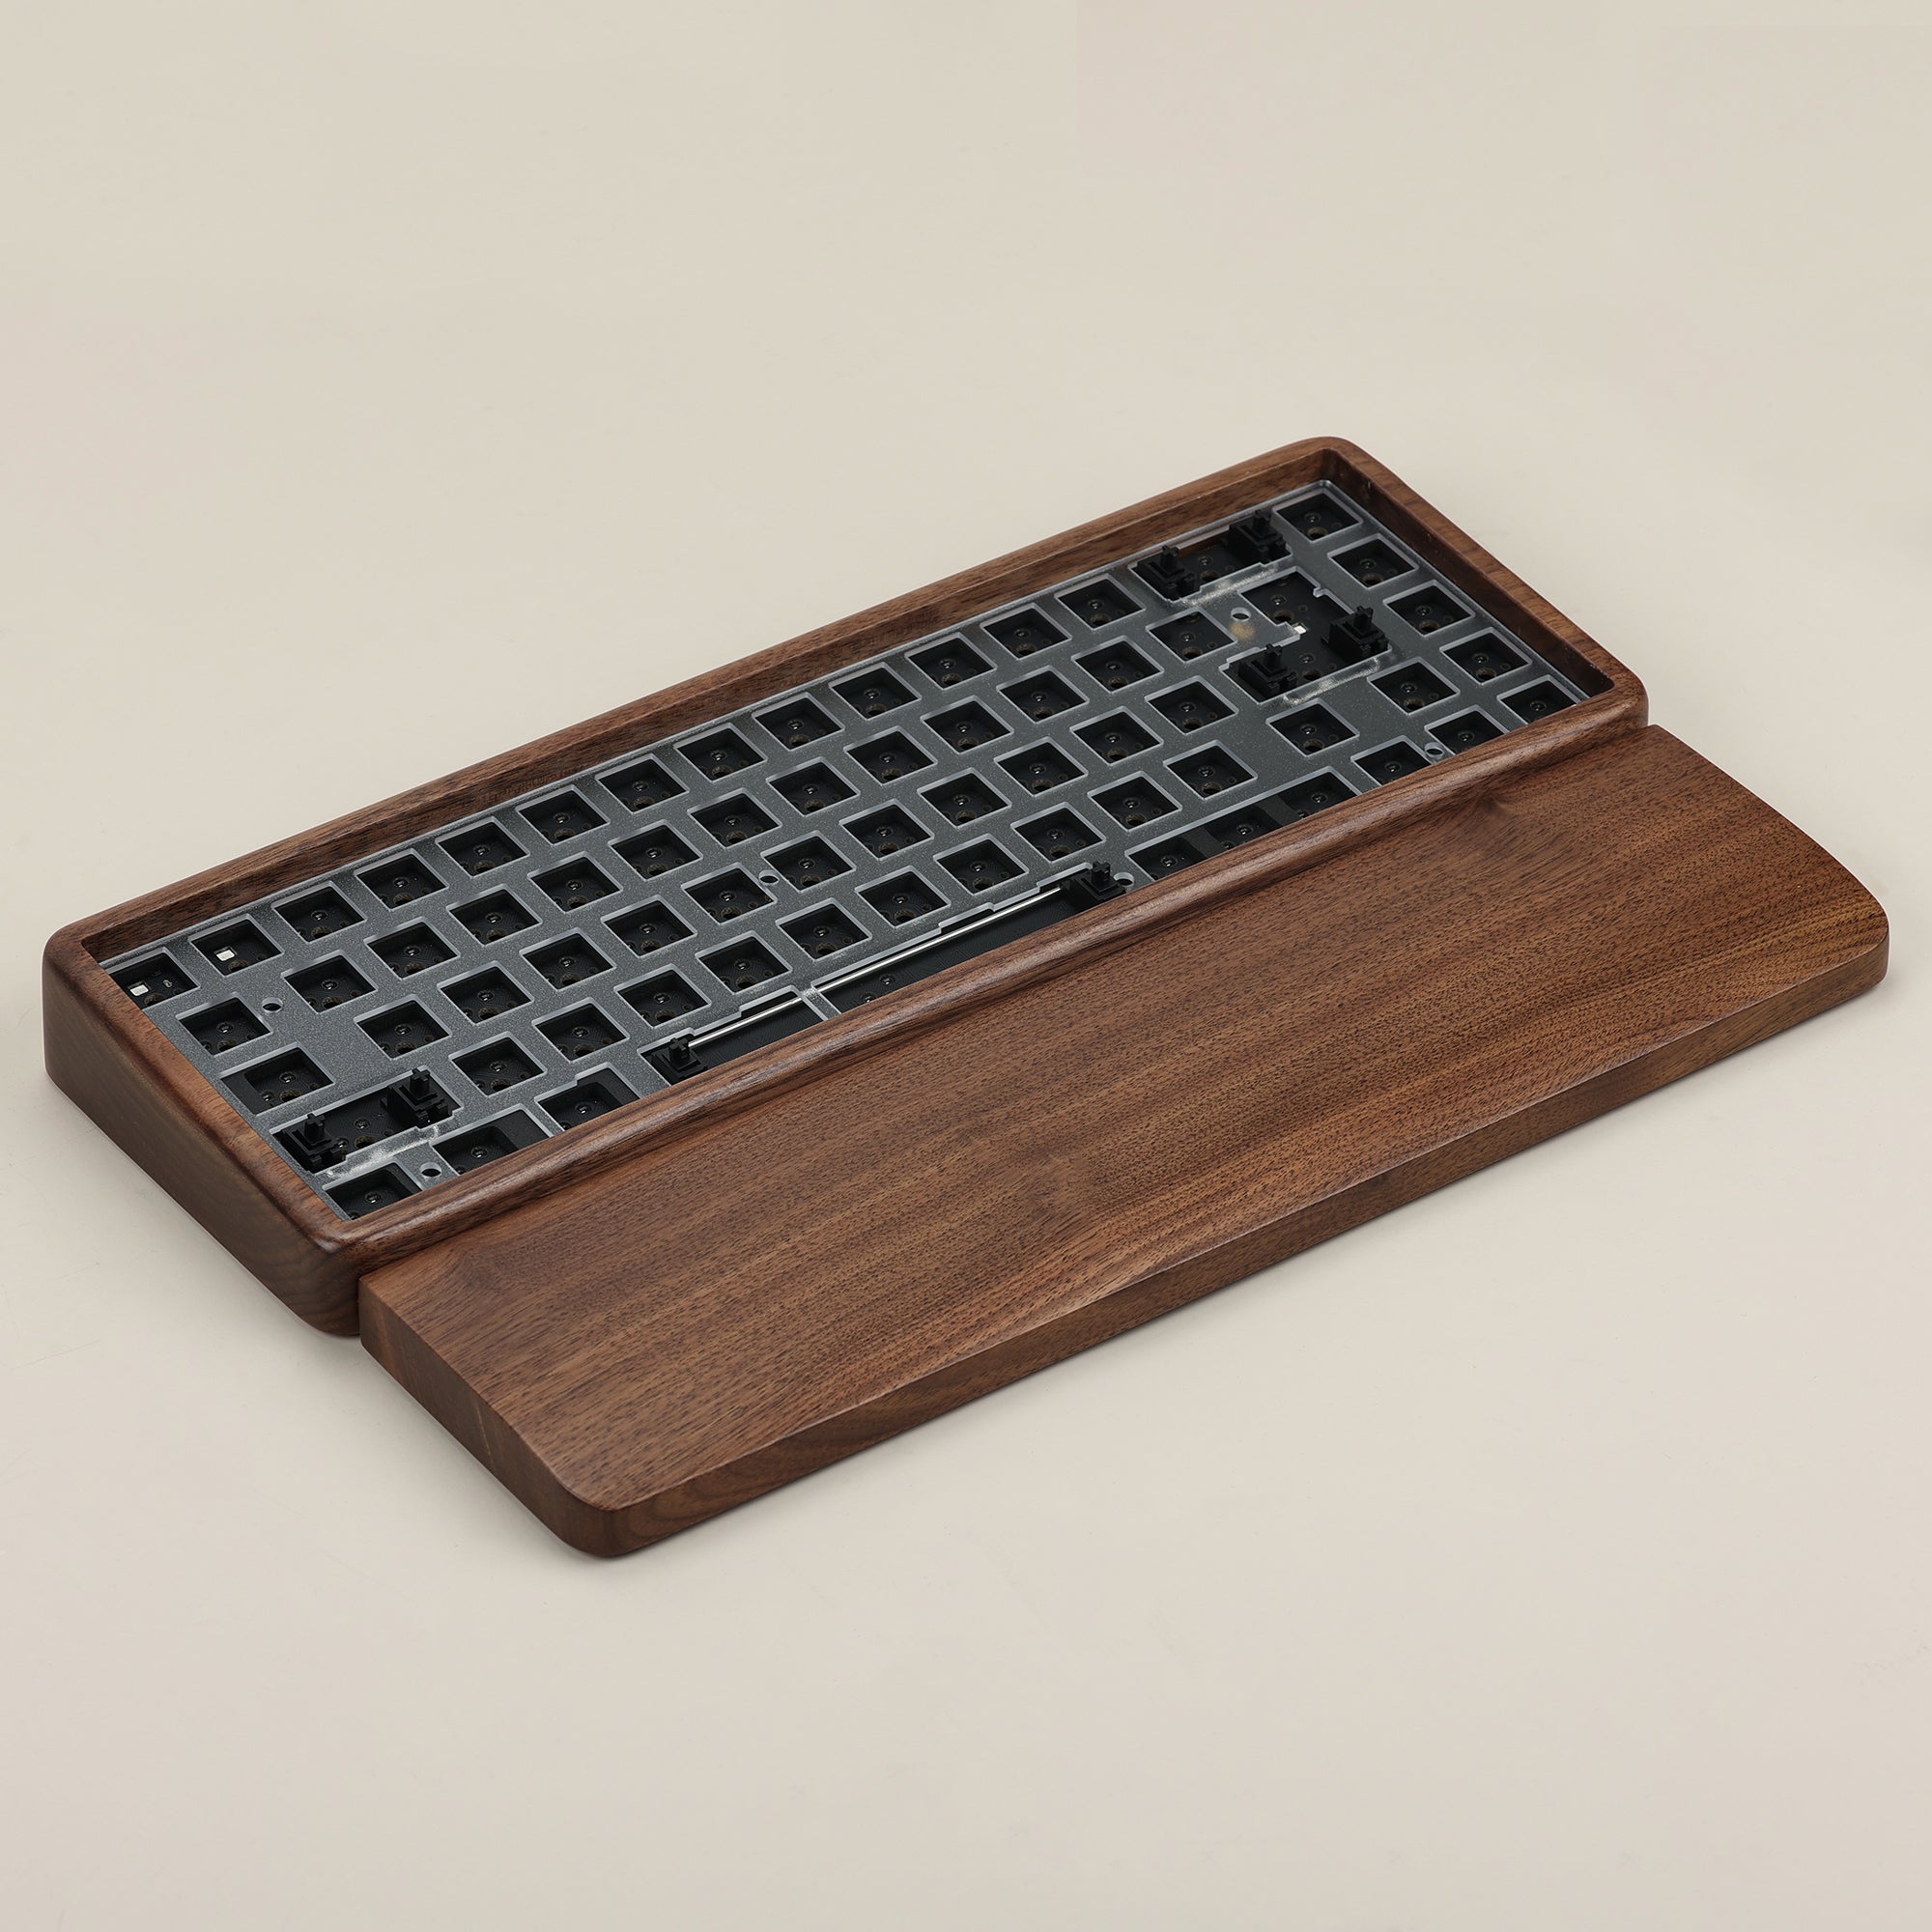 KBDfans 65% Wooden Case Hot-Swap Mechanical Keyboard DIY KIT With Wrist Tray Mount